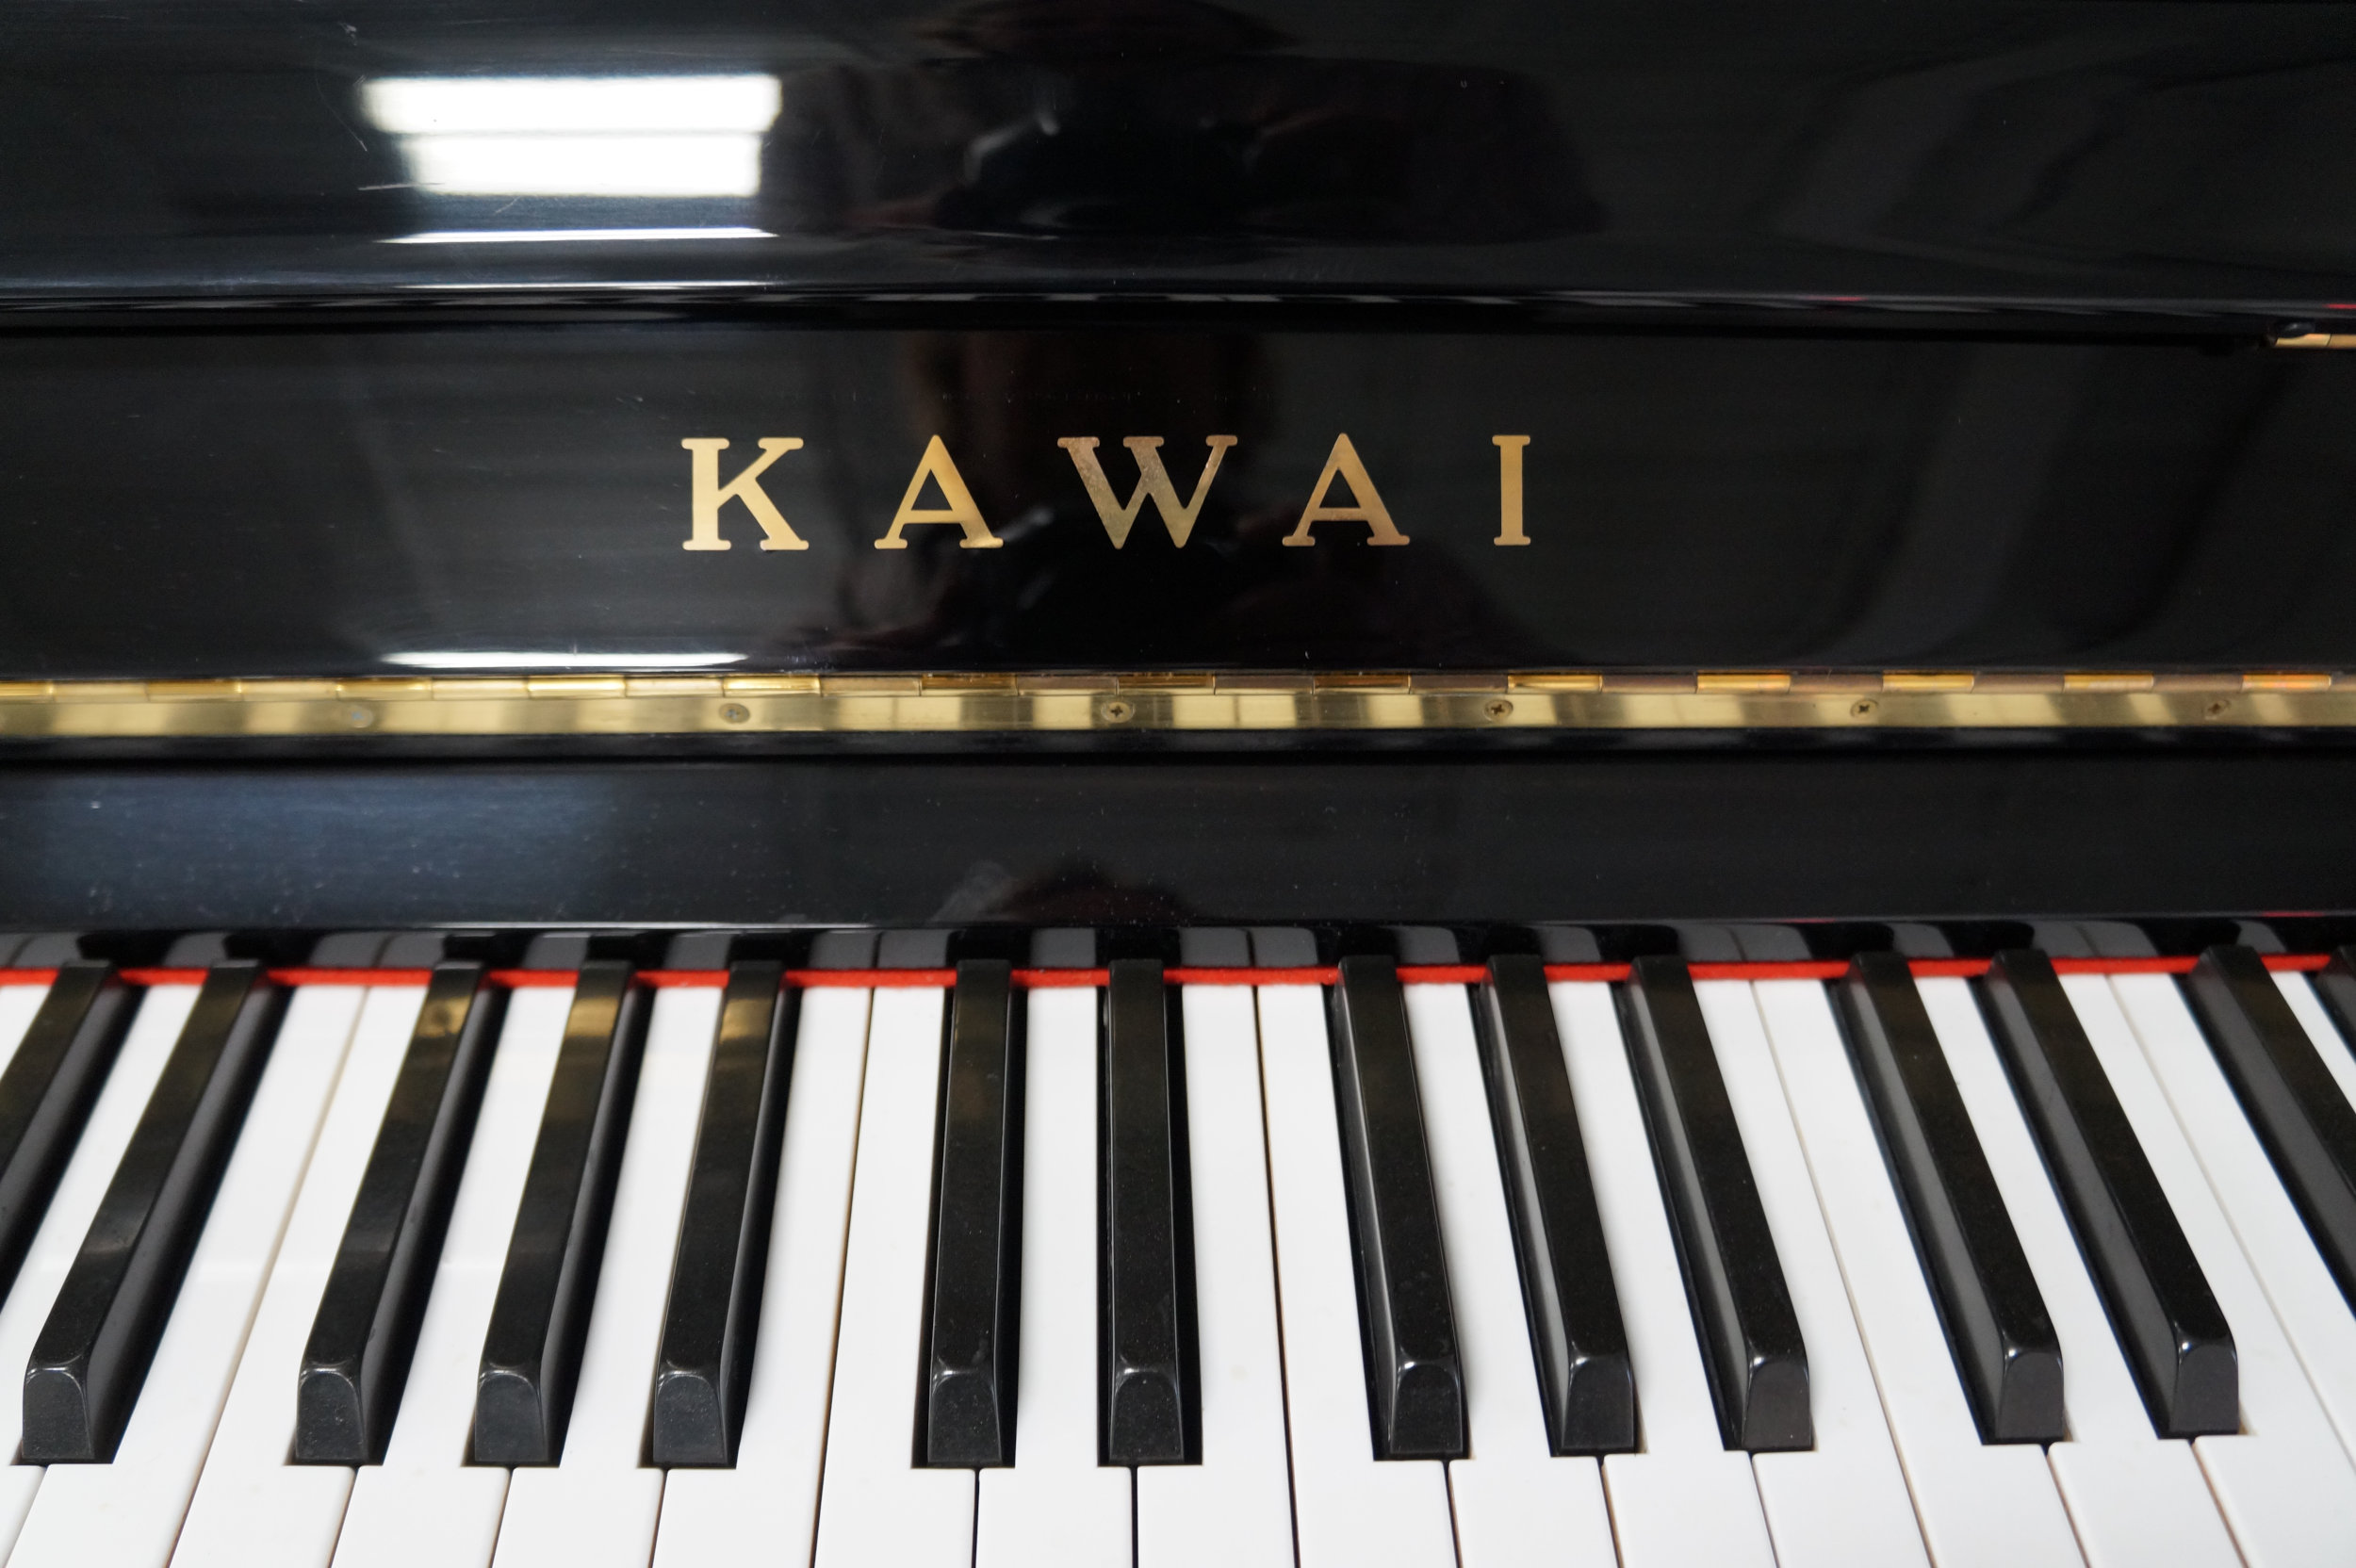 Kawai BS40 Professional Upright Piano - Black Polish